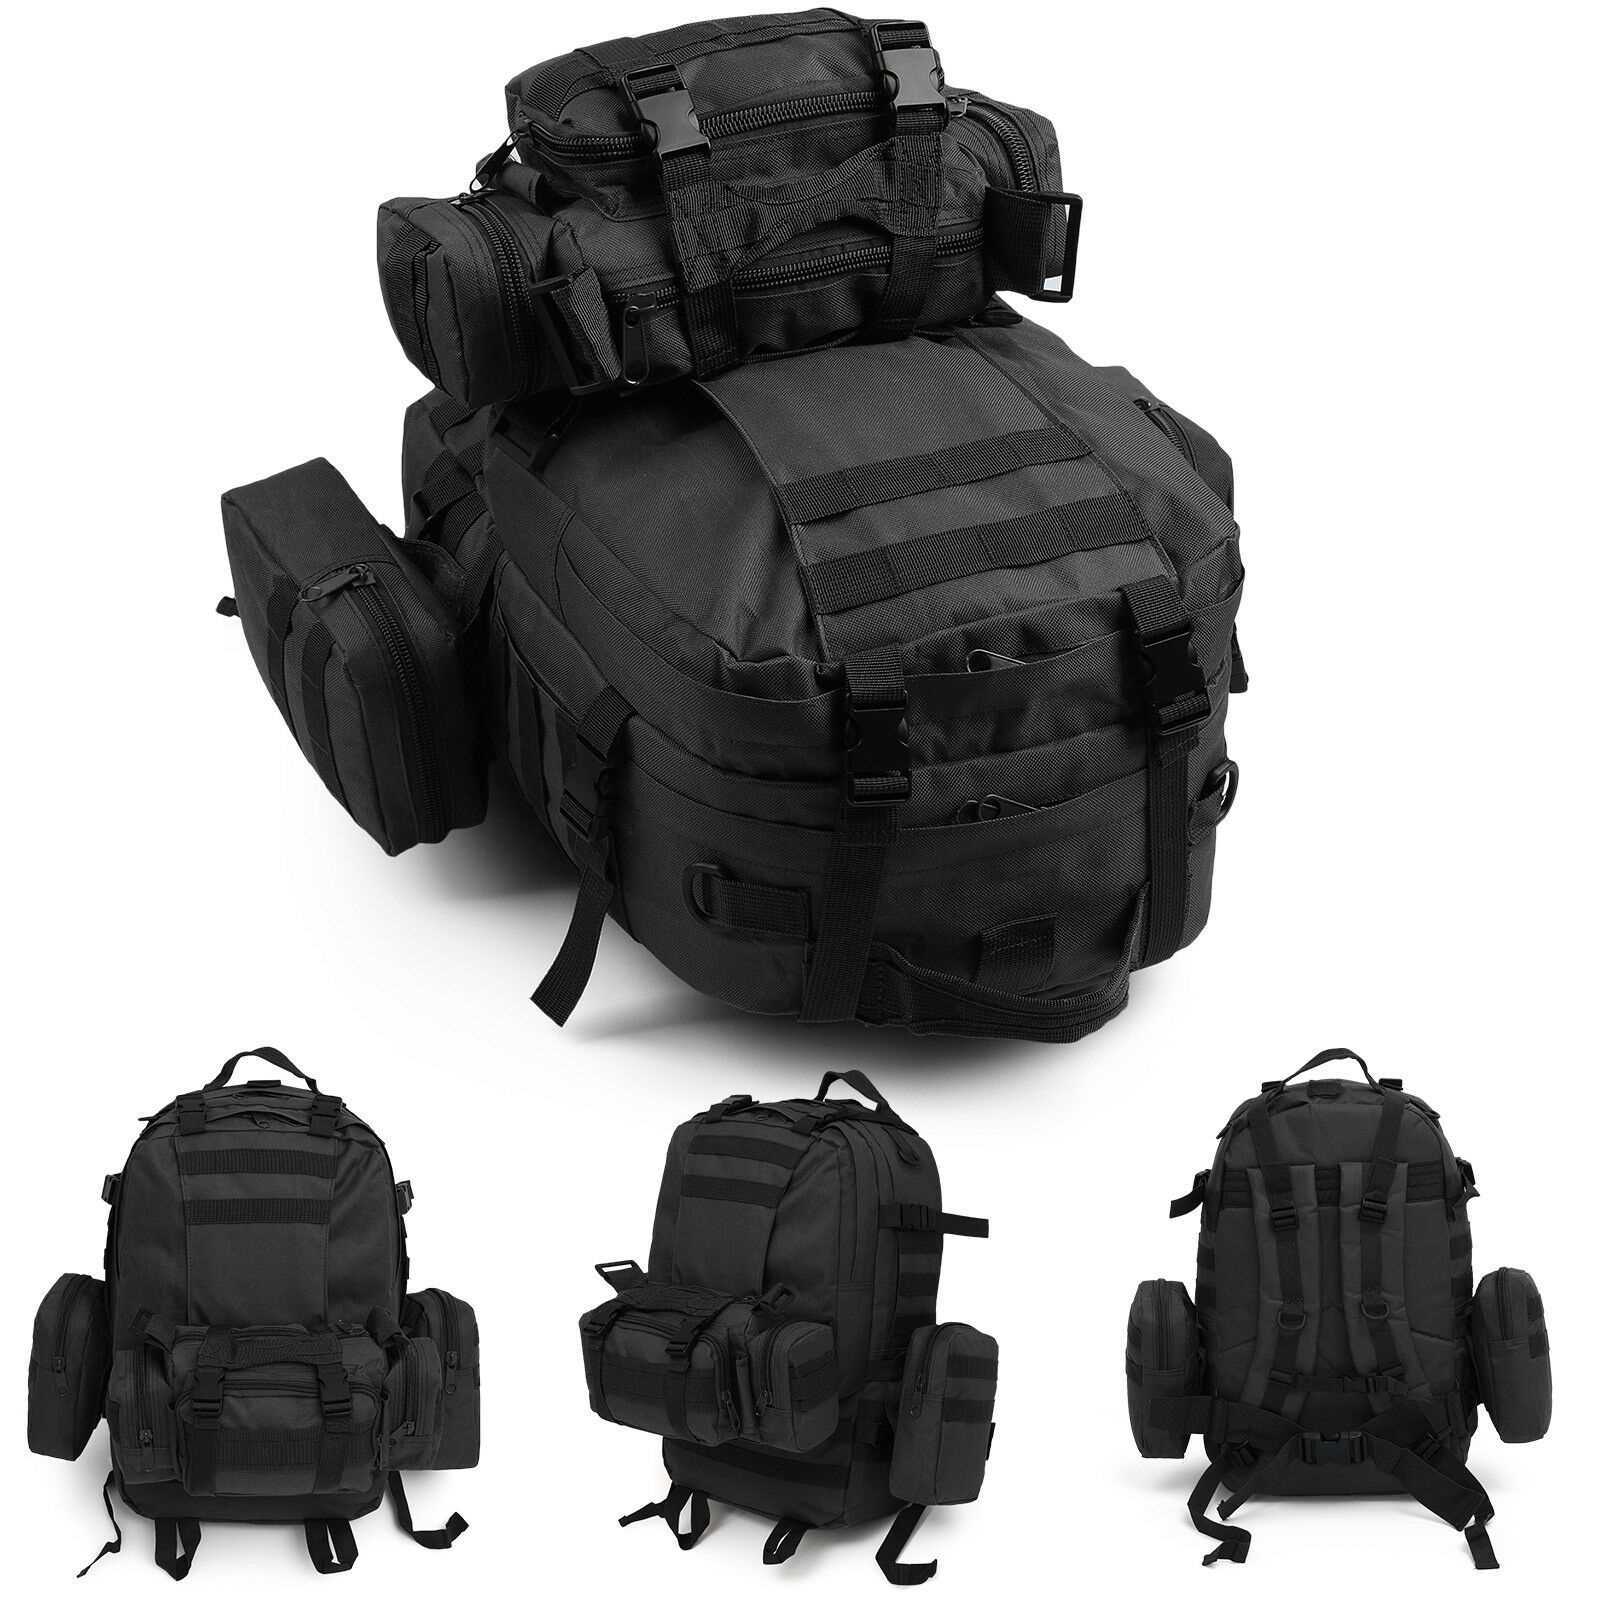  50L Black Modern Military Tactical Army Rucksacks Molle Backpack Camping Hiking Bag